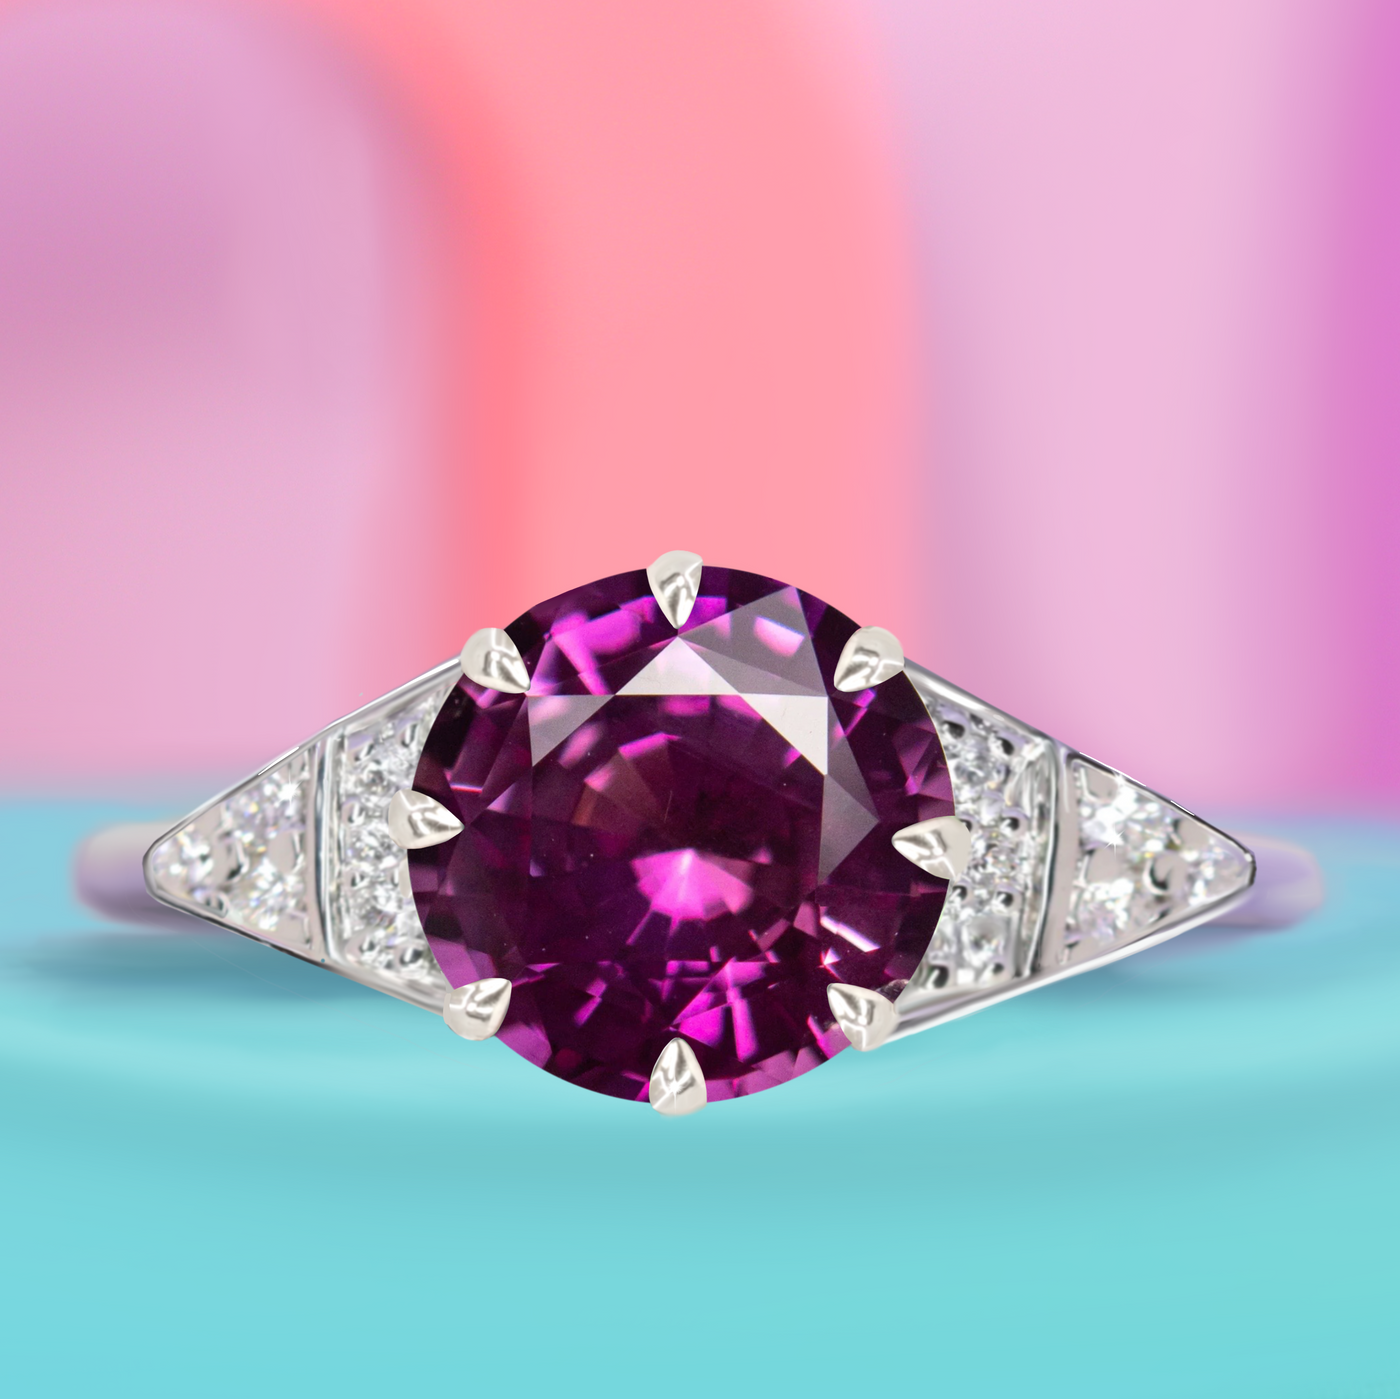 Coronation Collection - Elizabeth - Round Brilliant Cut Purple Sapphire and Round Brilliant Cut Diamond Art Deco Engagement Ring - Custom Made-to-Order Design